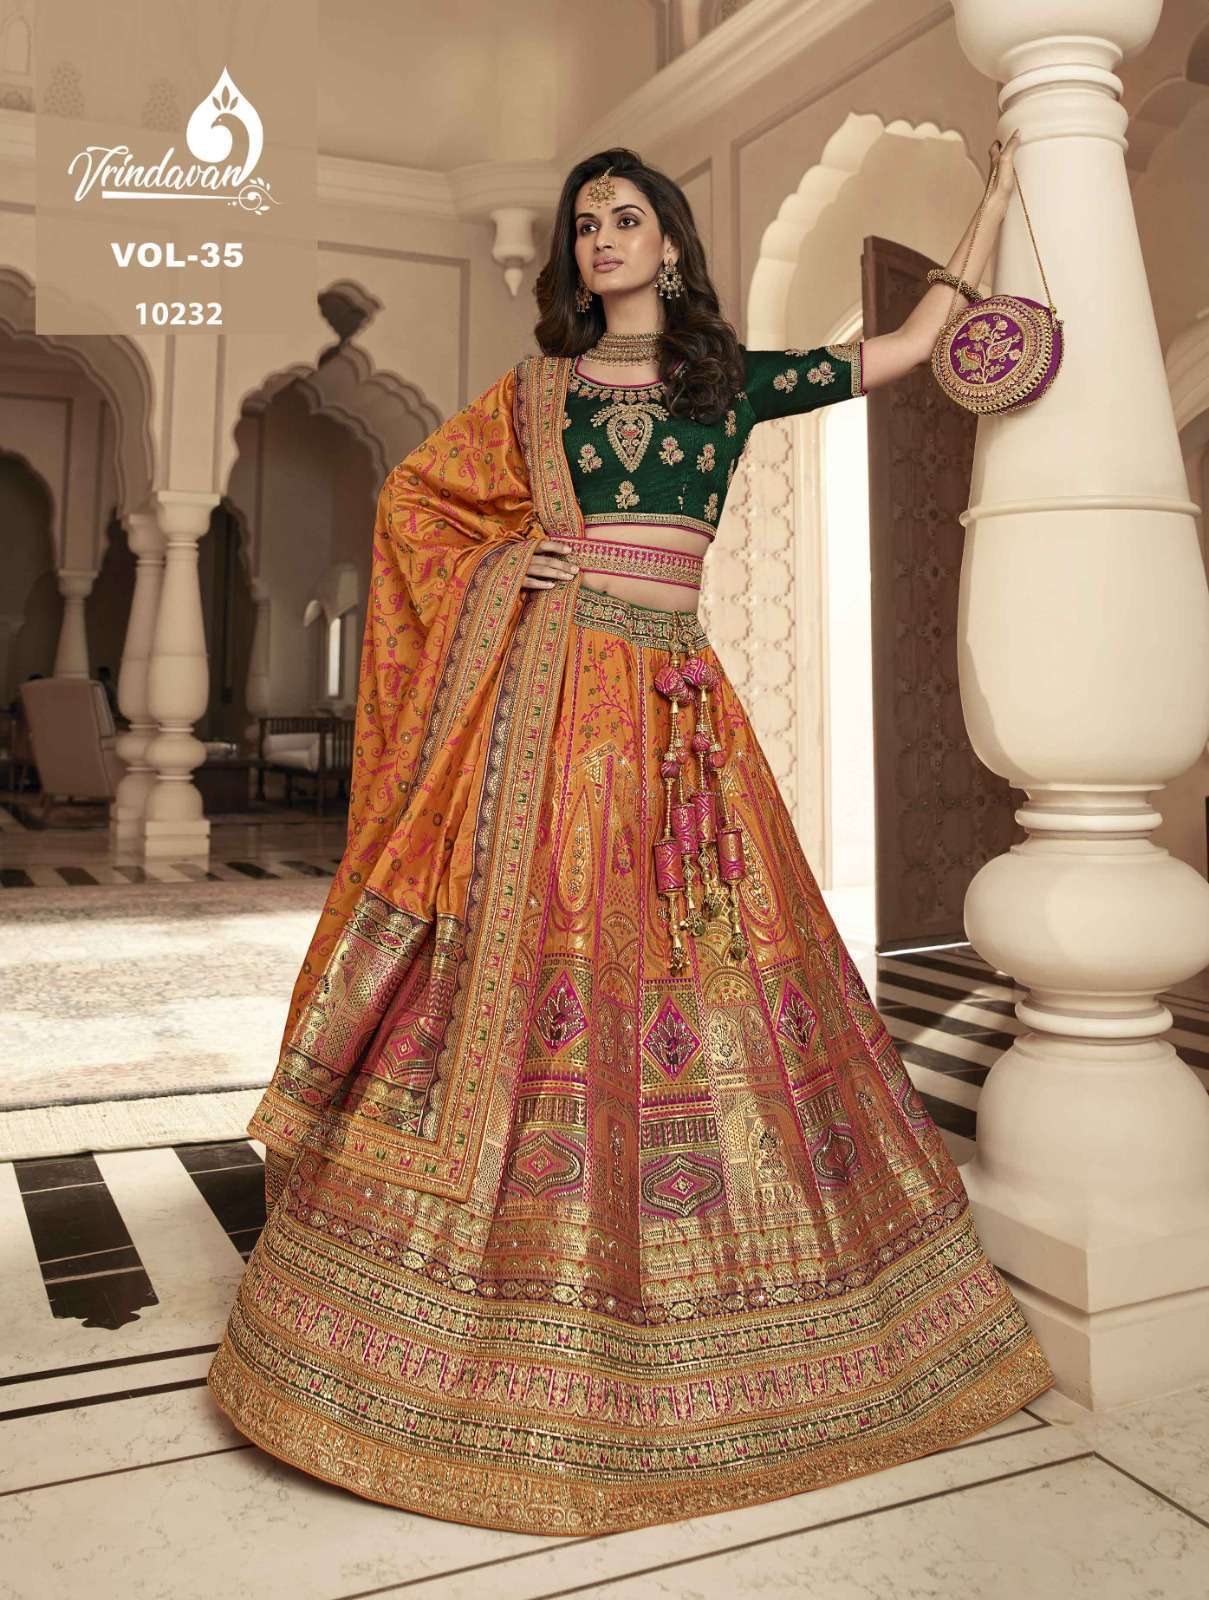 Royal presents vrindavan vol-35 banarasi silk bridal exclusive wedding Lahenga choli catalog wholesaler and exporters 